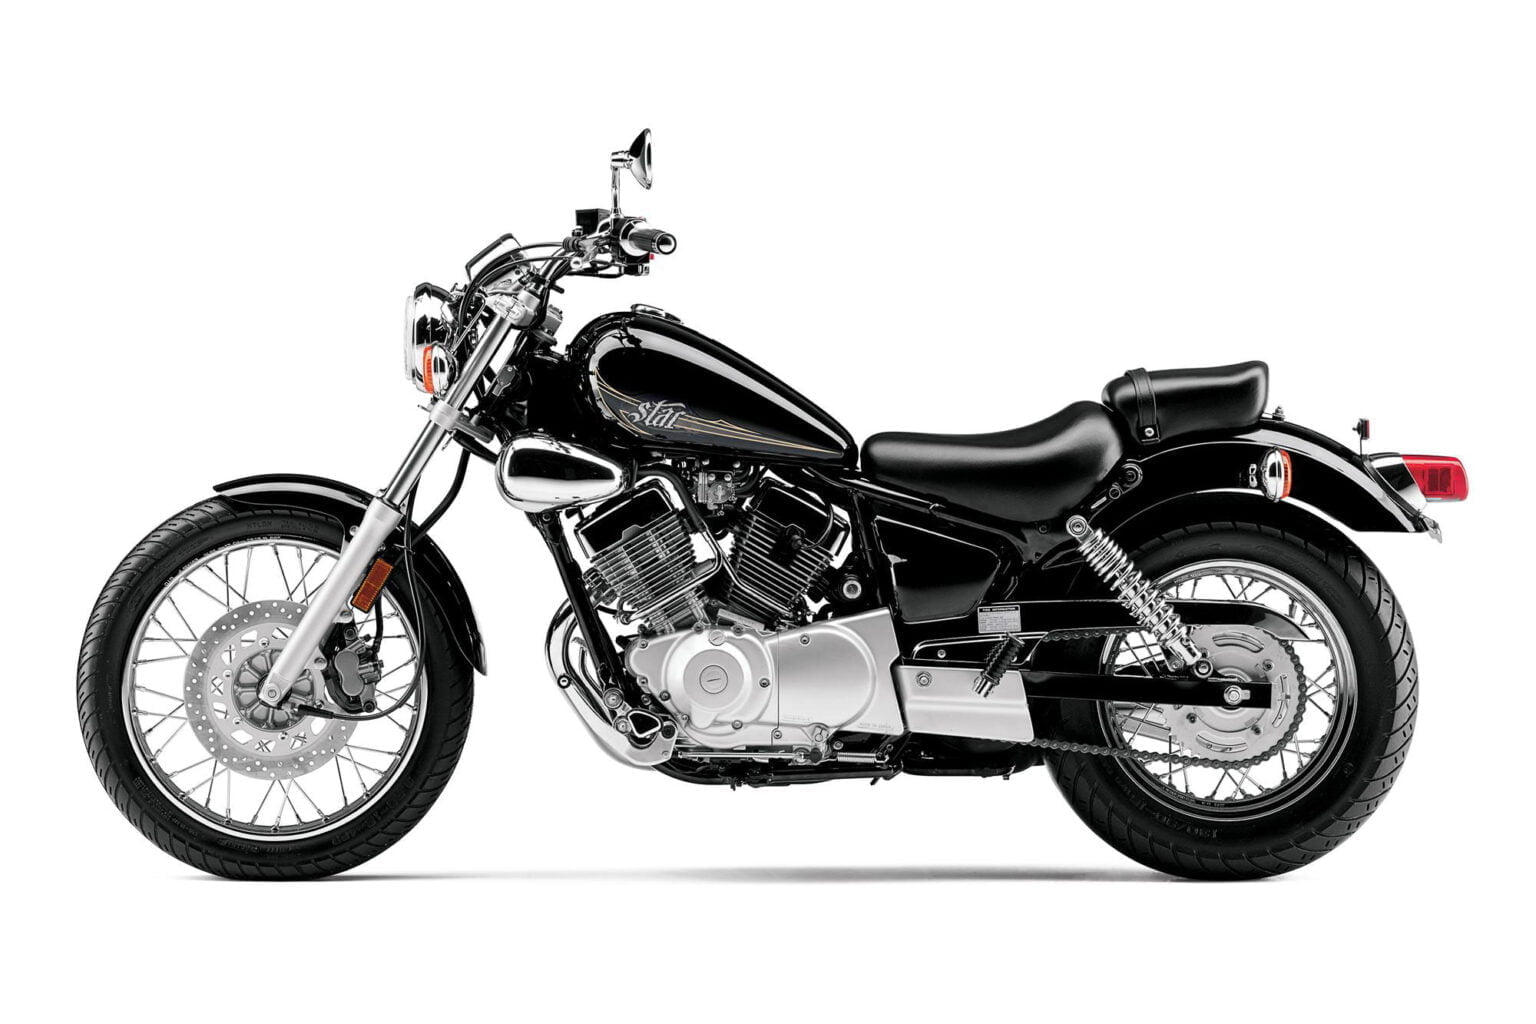 Descargar Manual de Partes Moto Yamaha 46B7 2012 DESCARGAR GRATIS